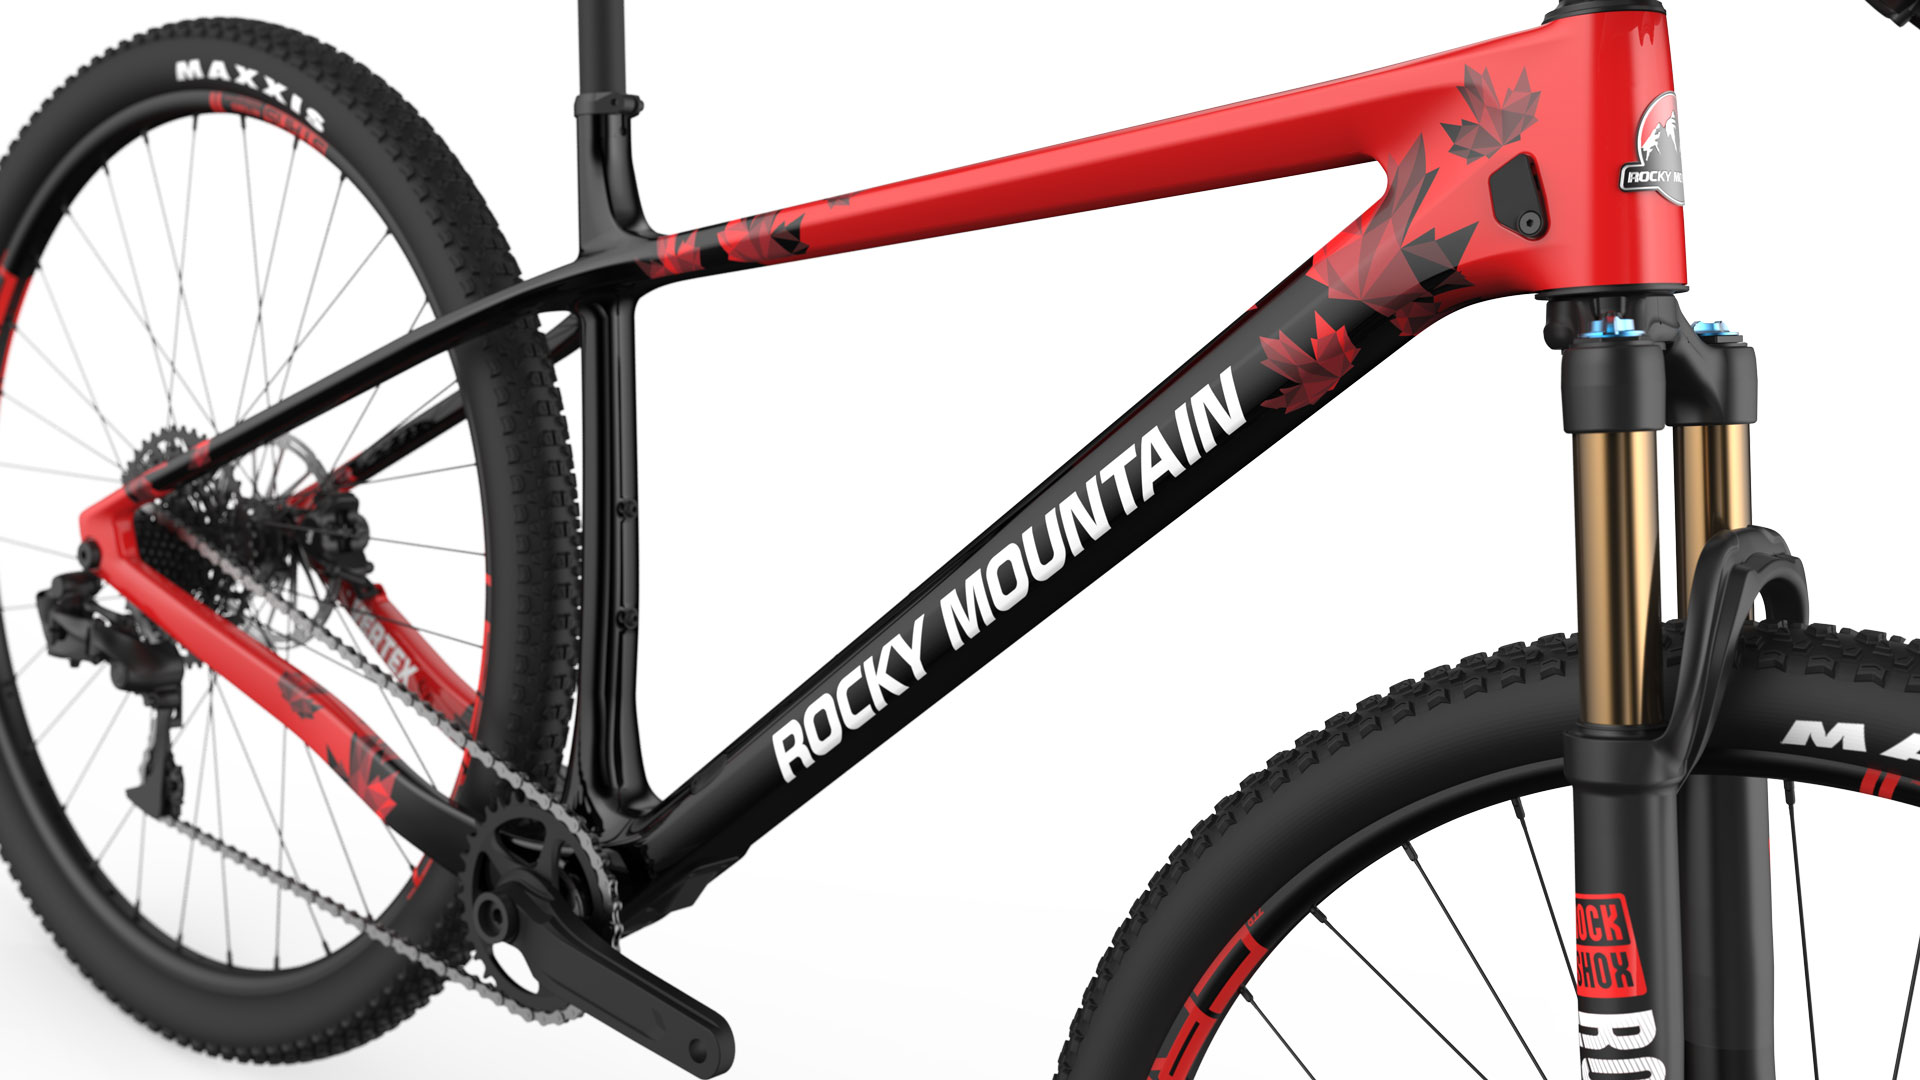 KeyShot Cliente destacado: Rockey Mountain Bicycles